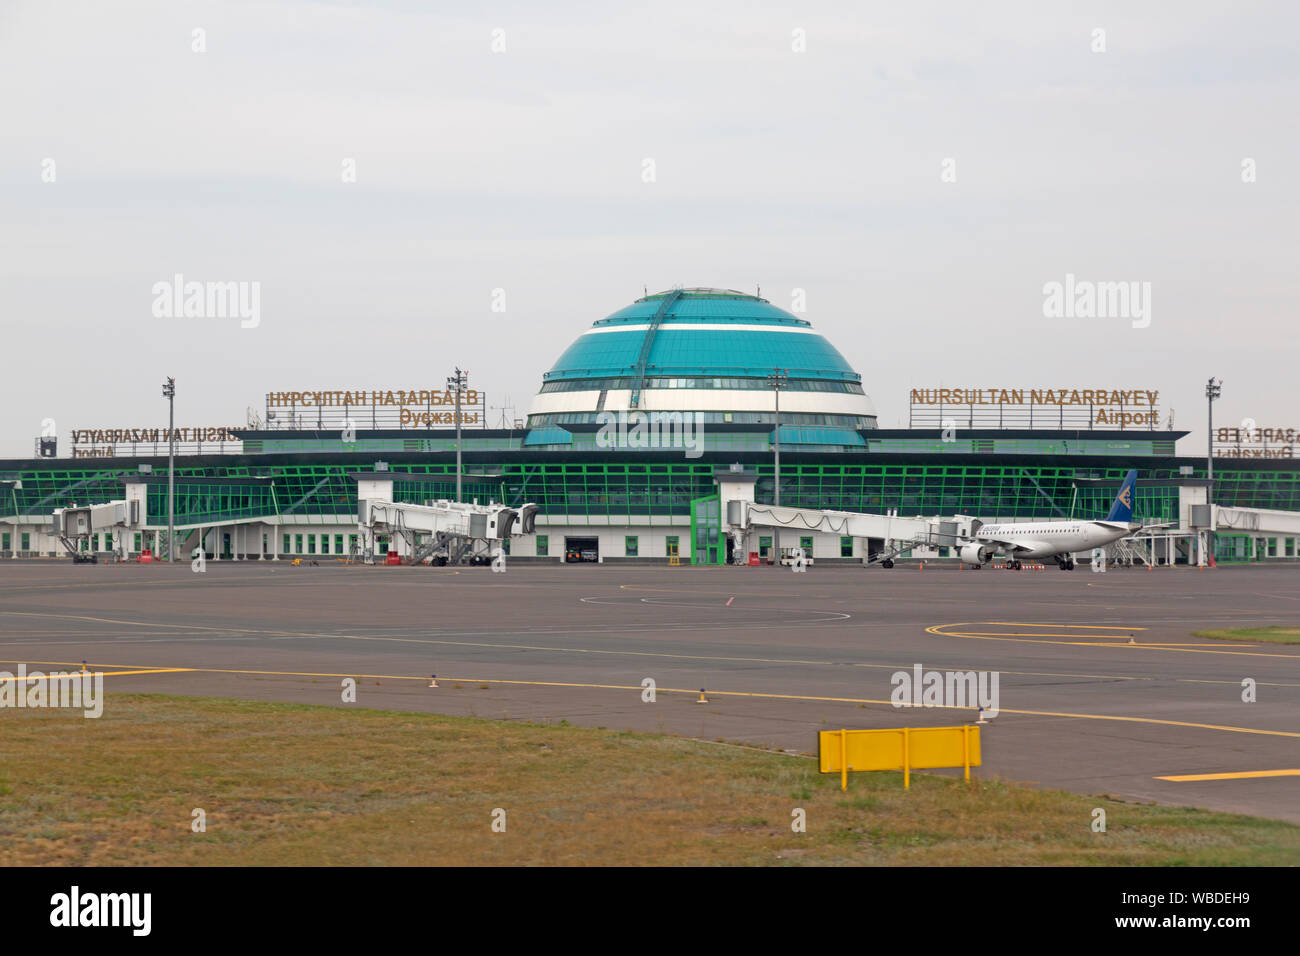 Terminal Building at Nursultan Nazarbayev International Airport in Kazakhstan. Stock Photo